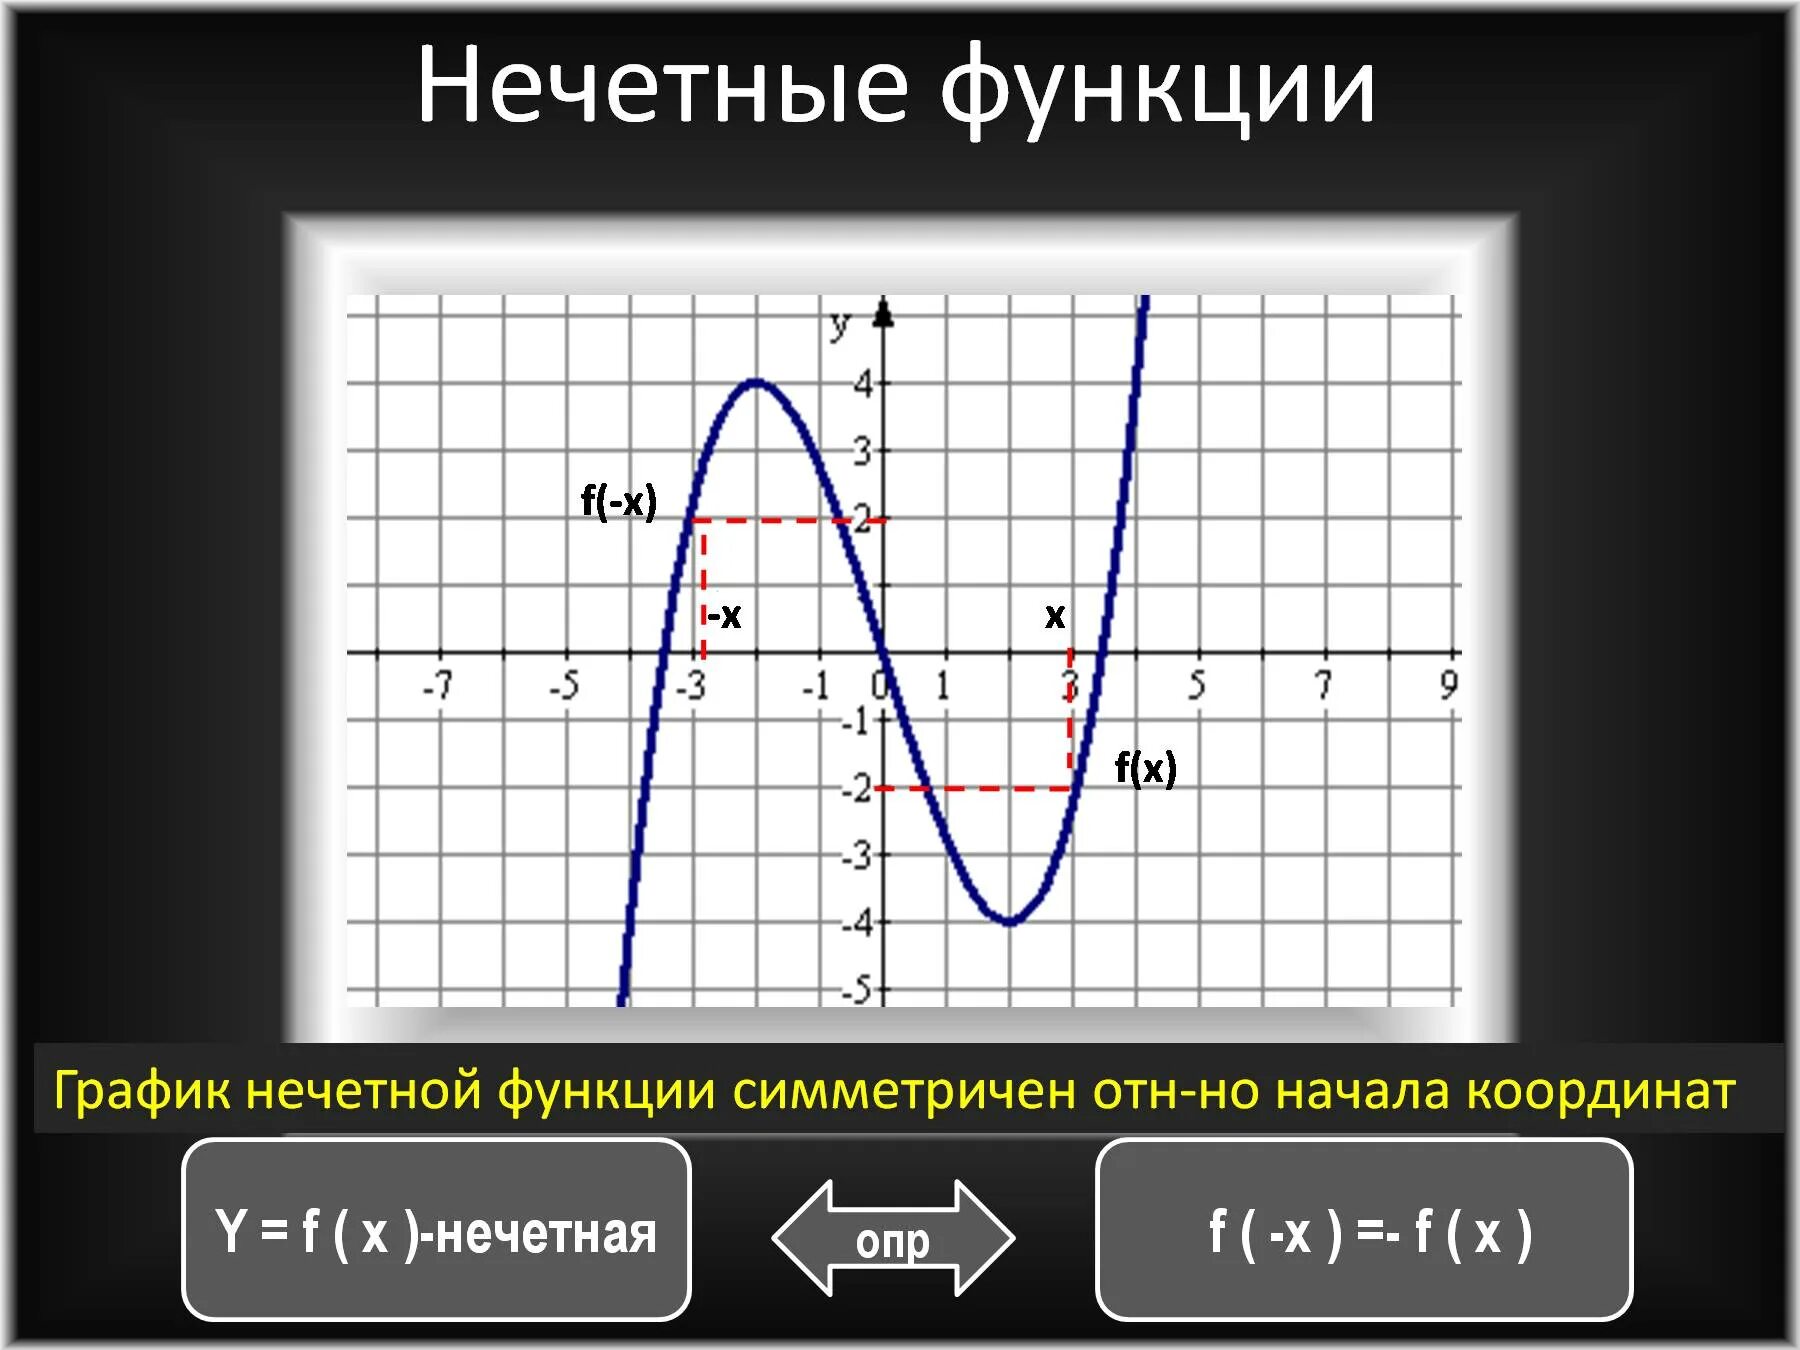 Начало координат график. График нечетной функции. Исследование Графика функции на четность. График нечетной функции симметричен относительно. Четность функции по графику.